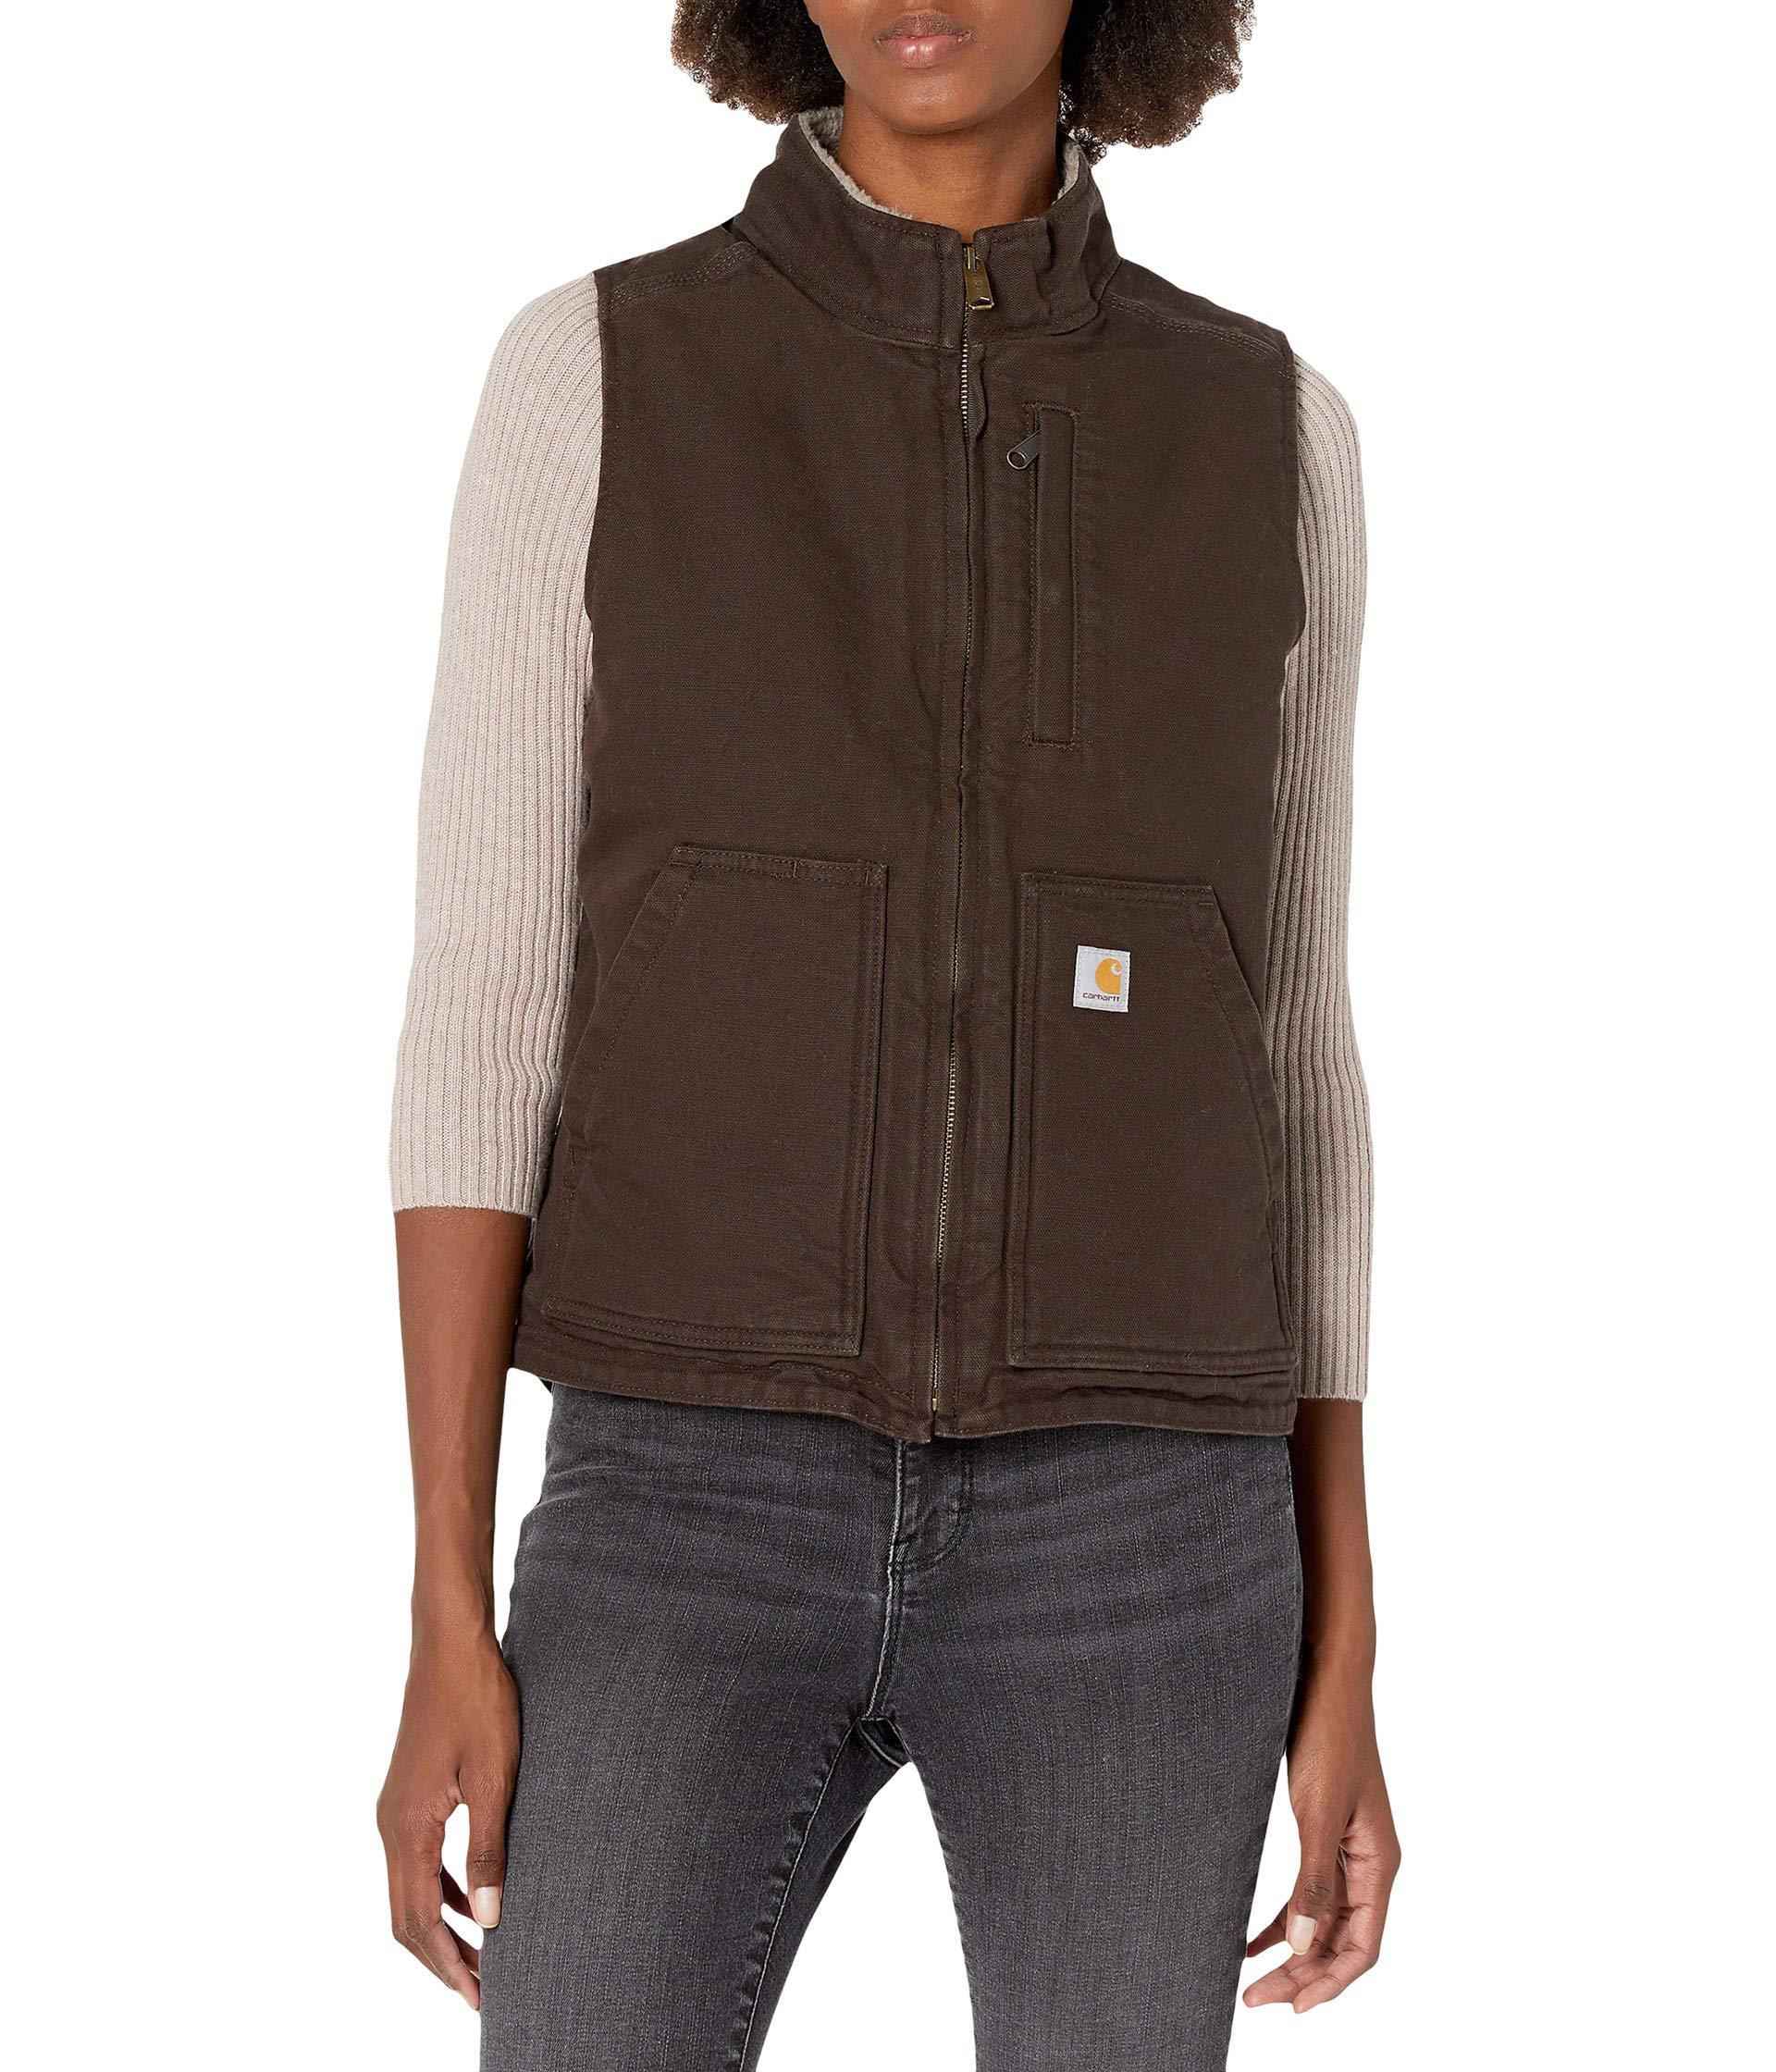 Download Carhartt Cotton Ov277 Sherpa Lined Mock Neck Vest in Brown ...